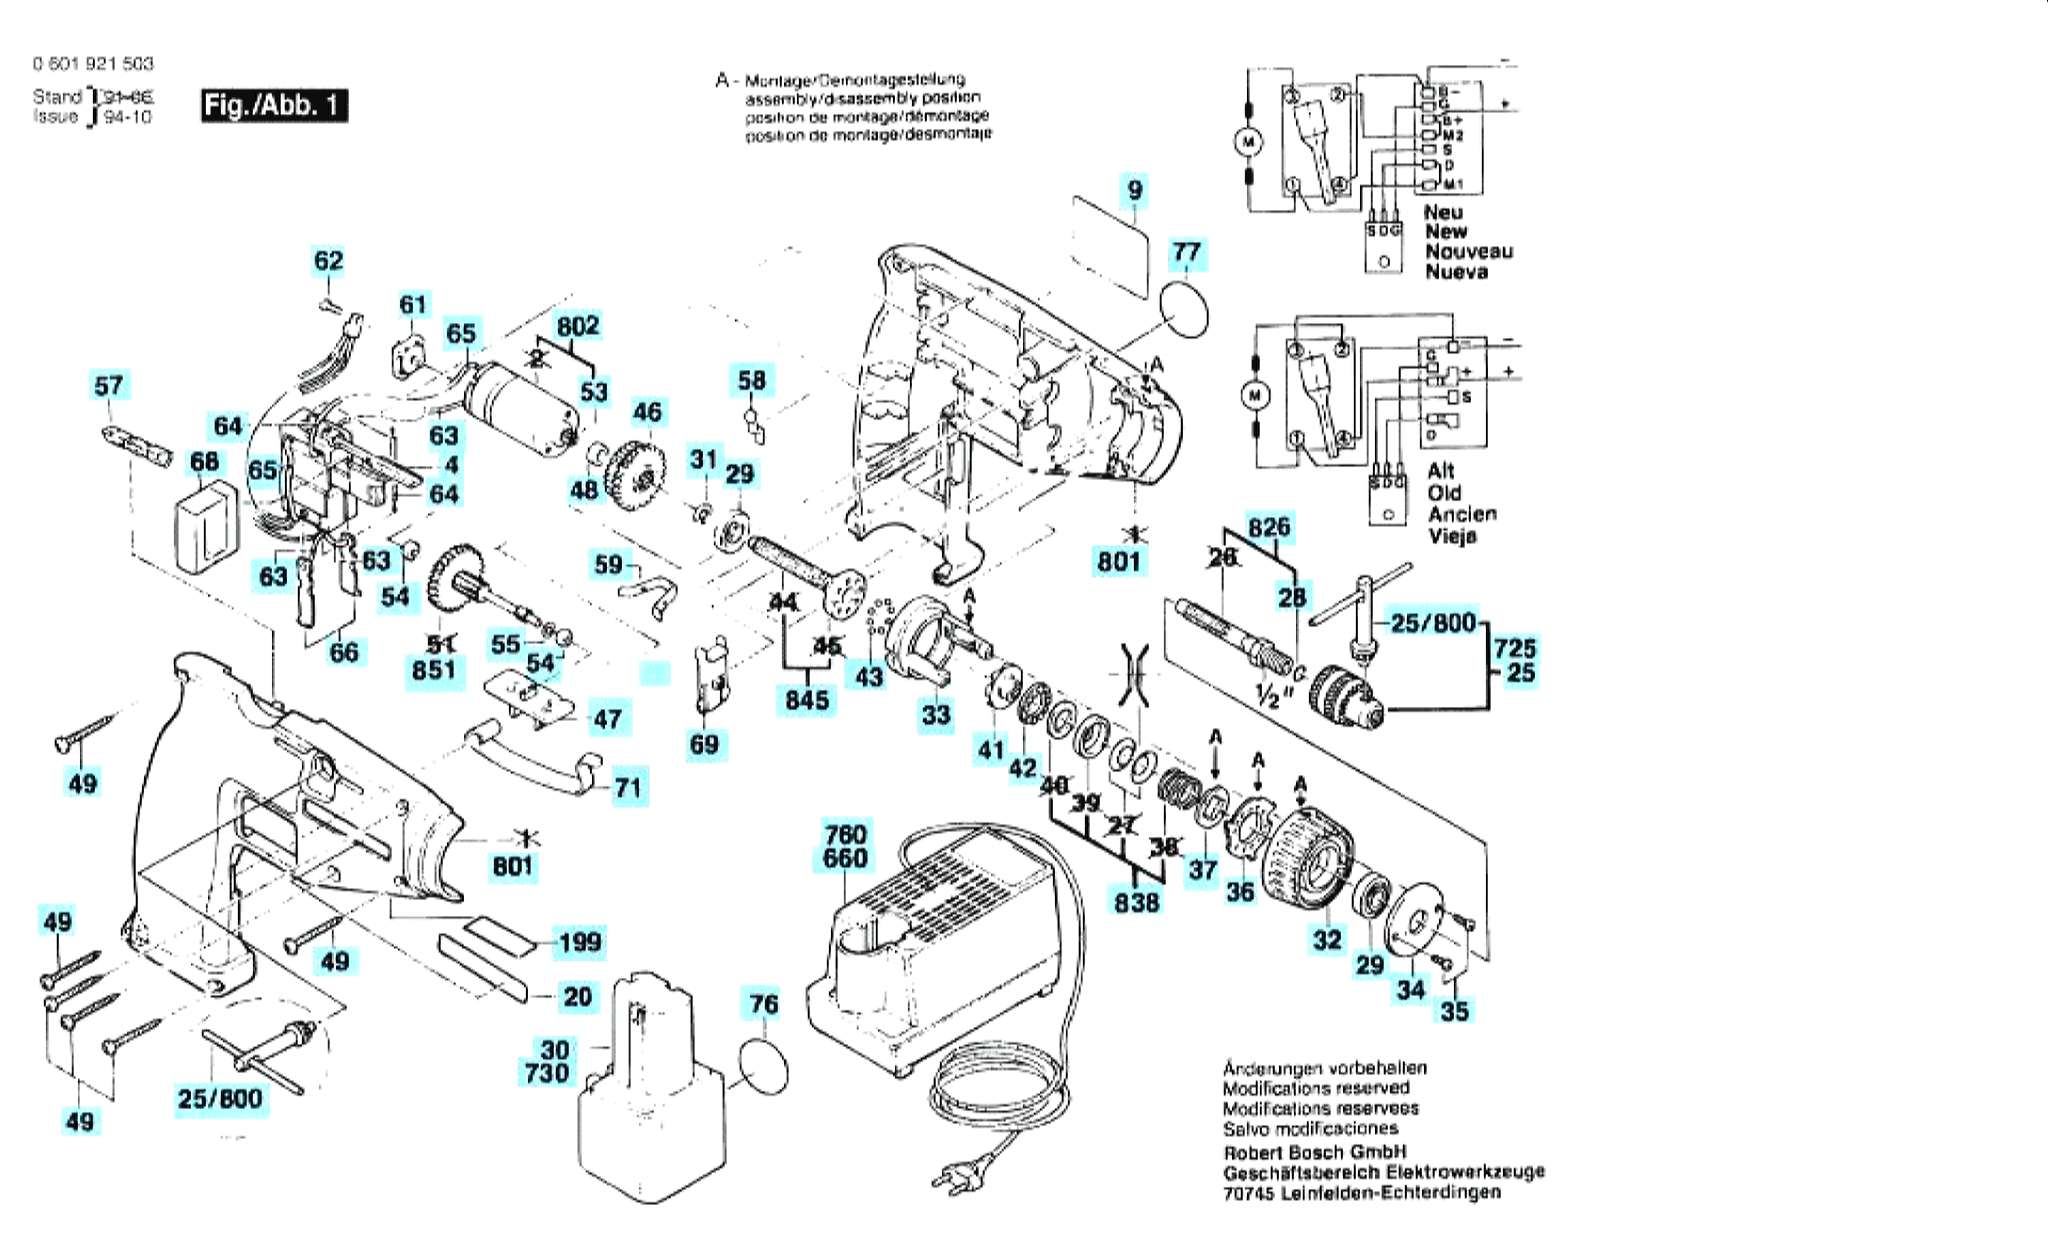 Запчасти, схема и деталировка Bosch GSR 12 VES (ТИП 0601921566)